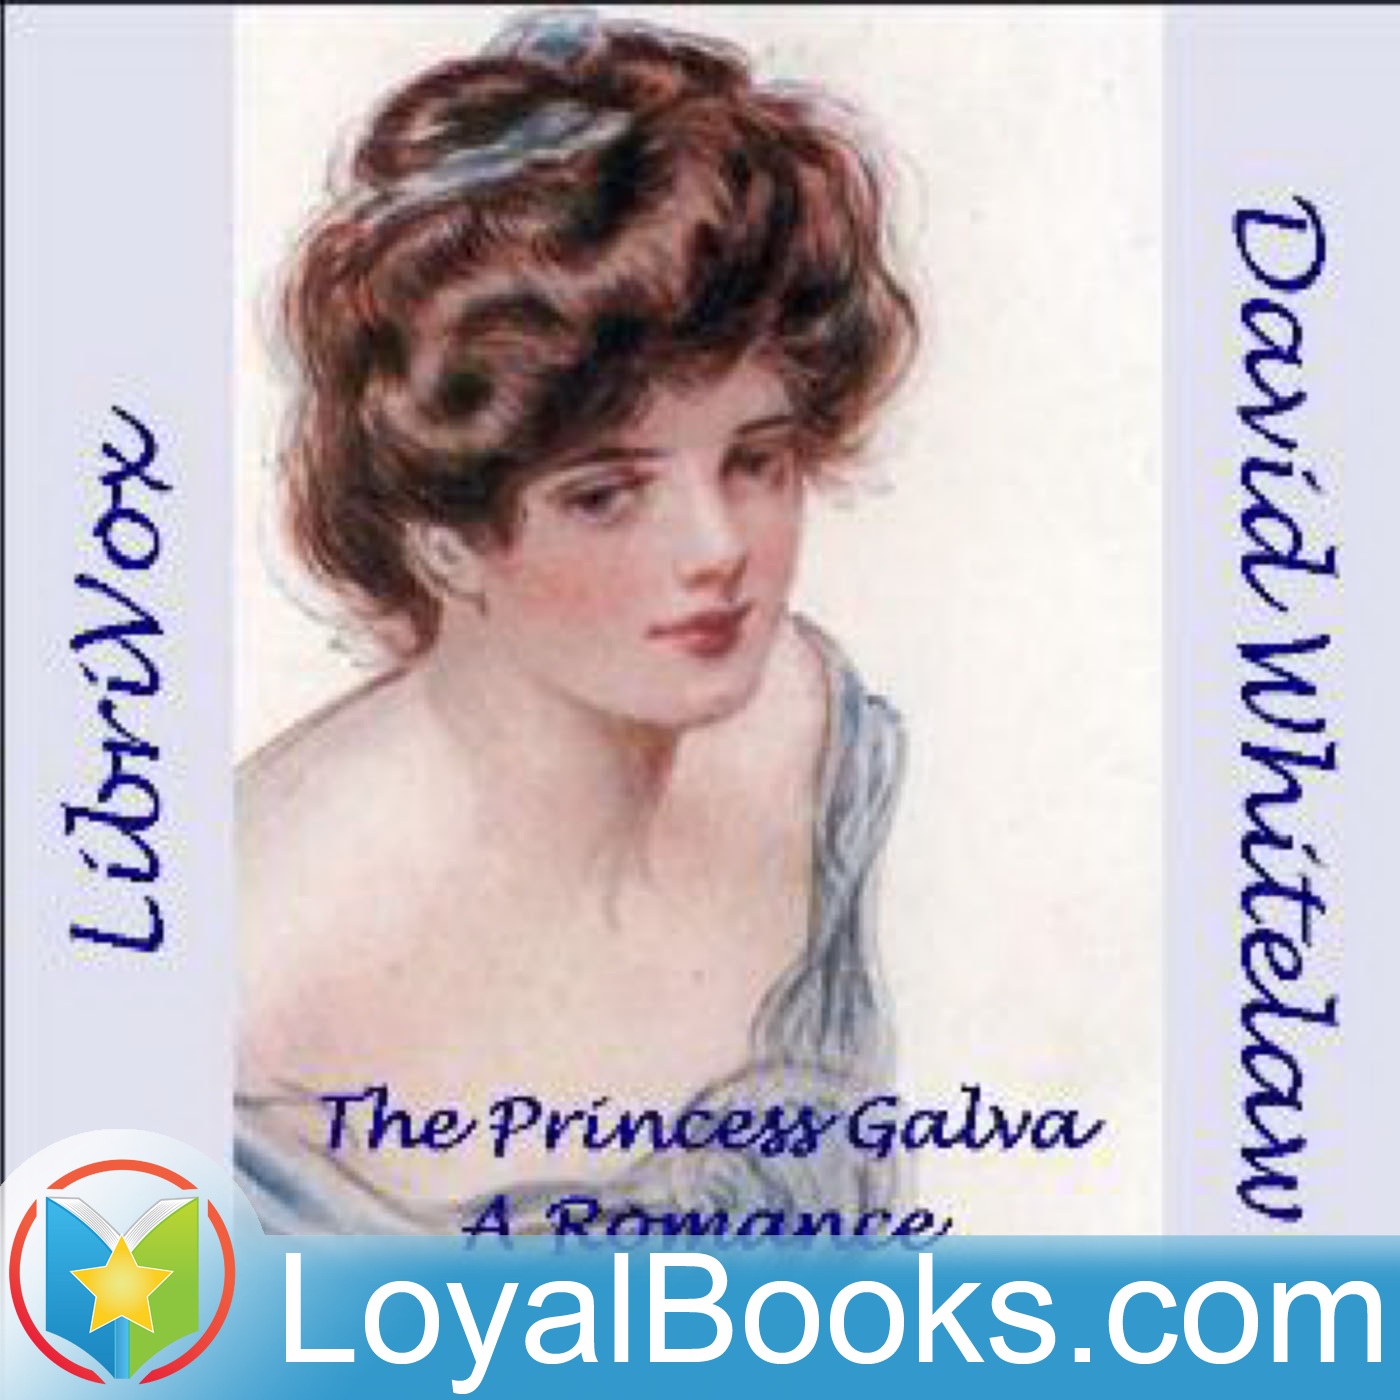 The Princess Galva by David Whitelaw